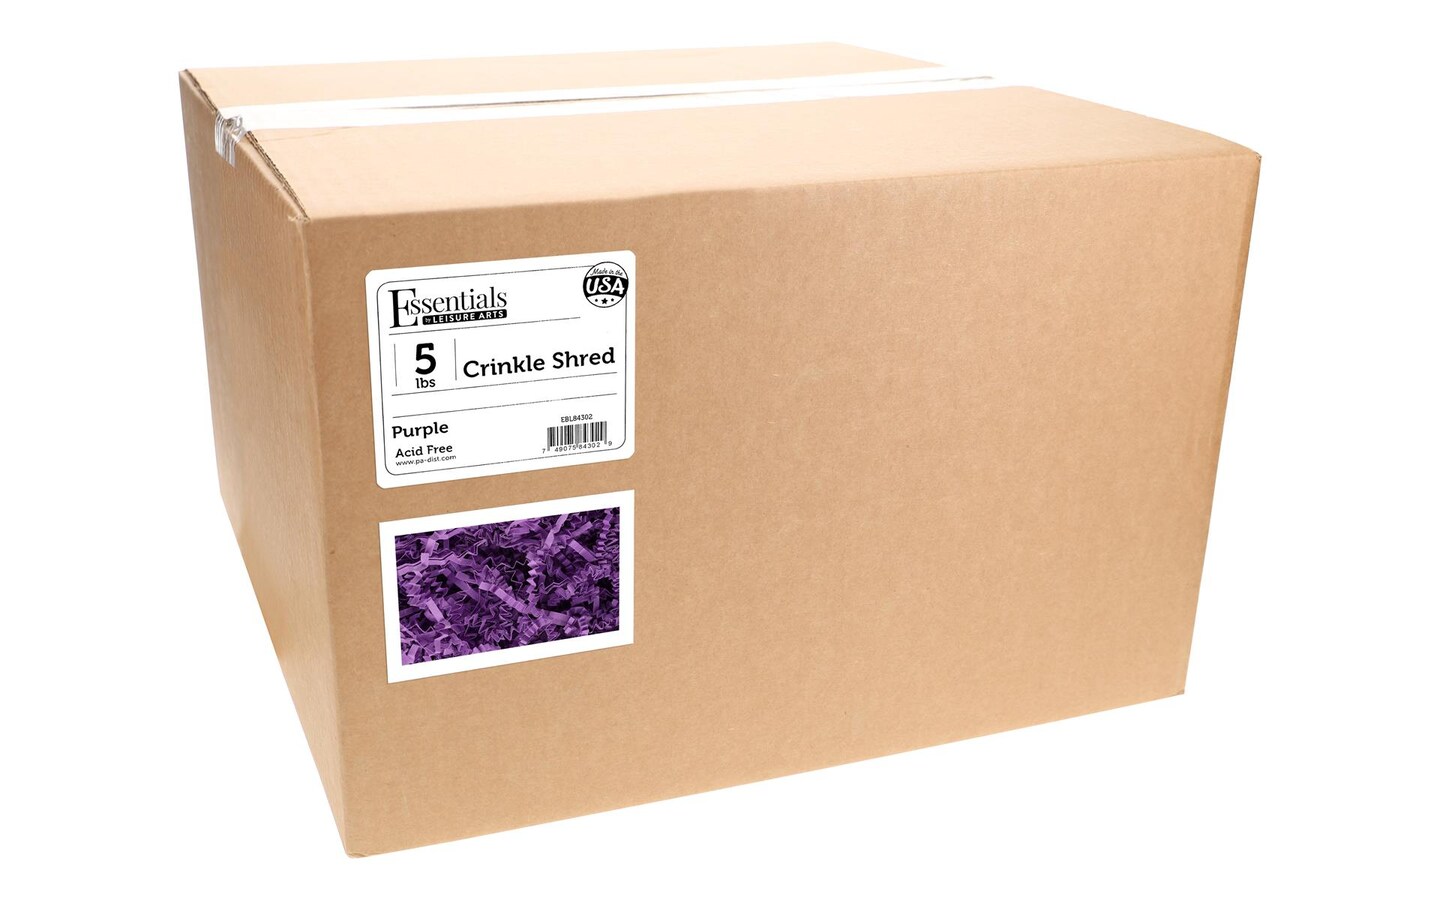 Essentials by Leisure Arts Crinkle Shred Box, Purple, 5lbs Shredded Paper Filler, Crinkle Cut Paper Shred Filler, Box Filler, Shredded Paper for Gift Box, Paper Crinkle Filler, Box Filling